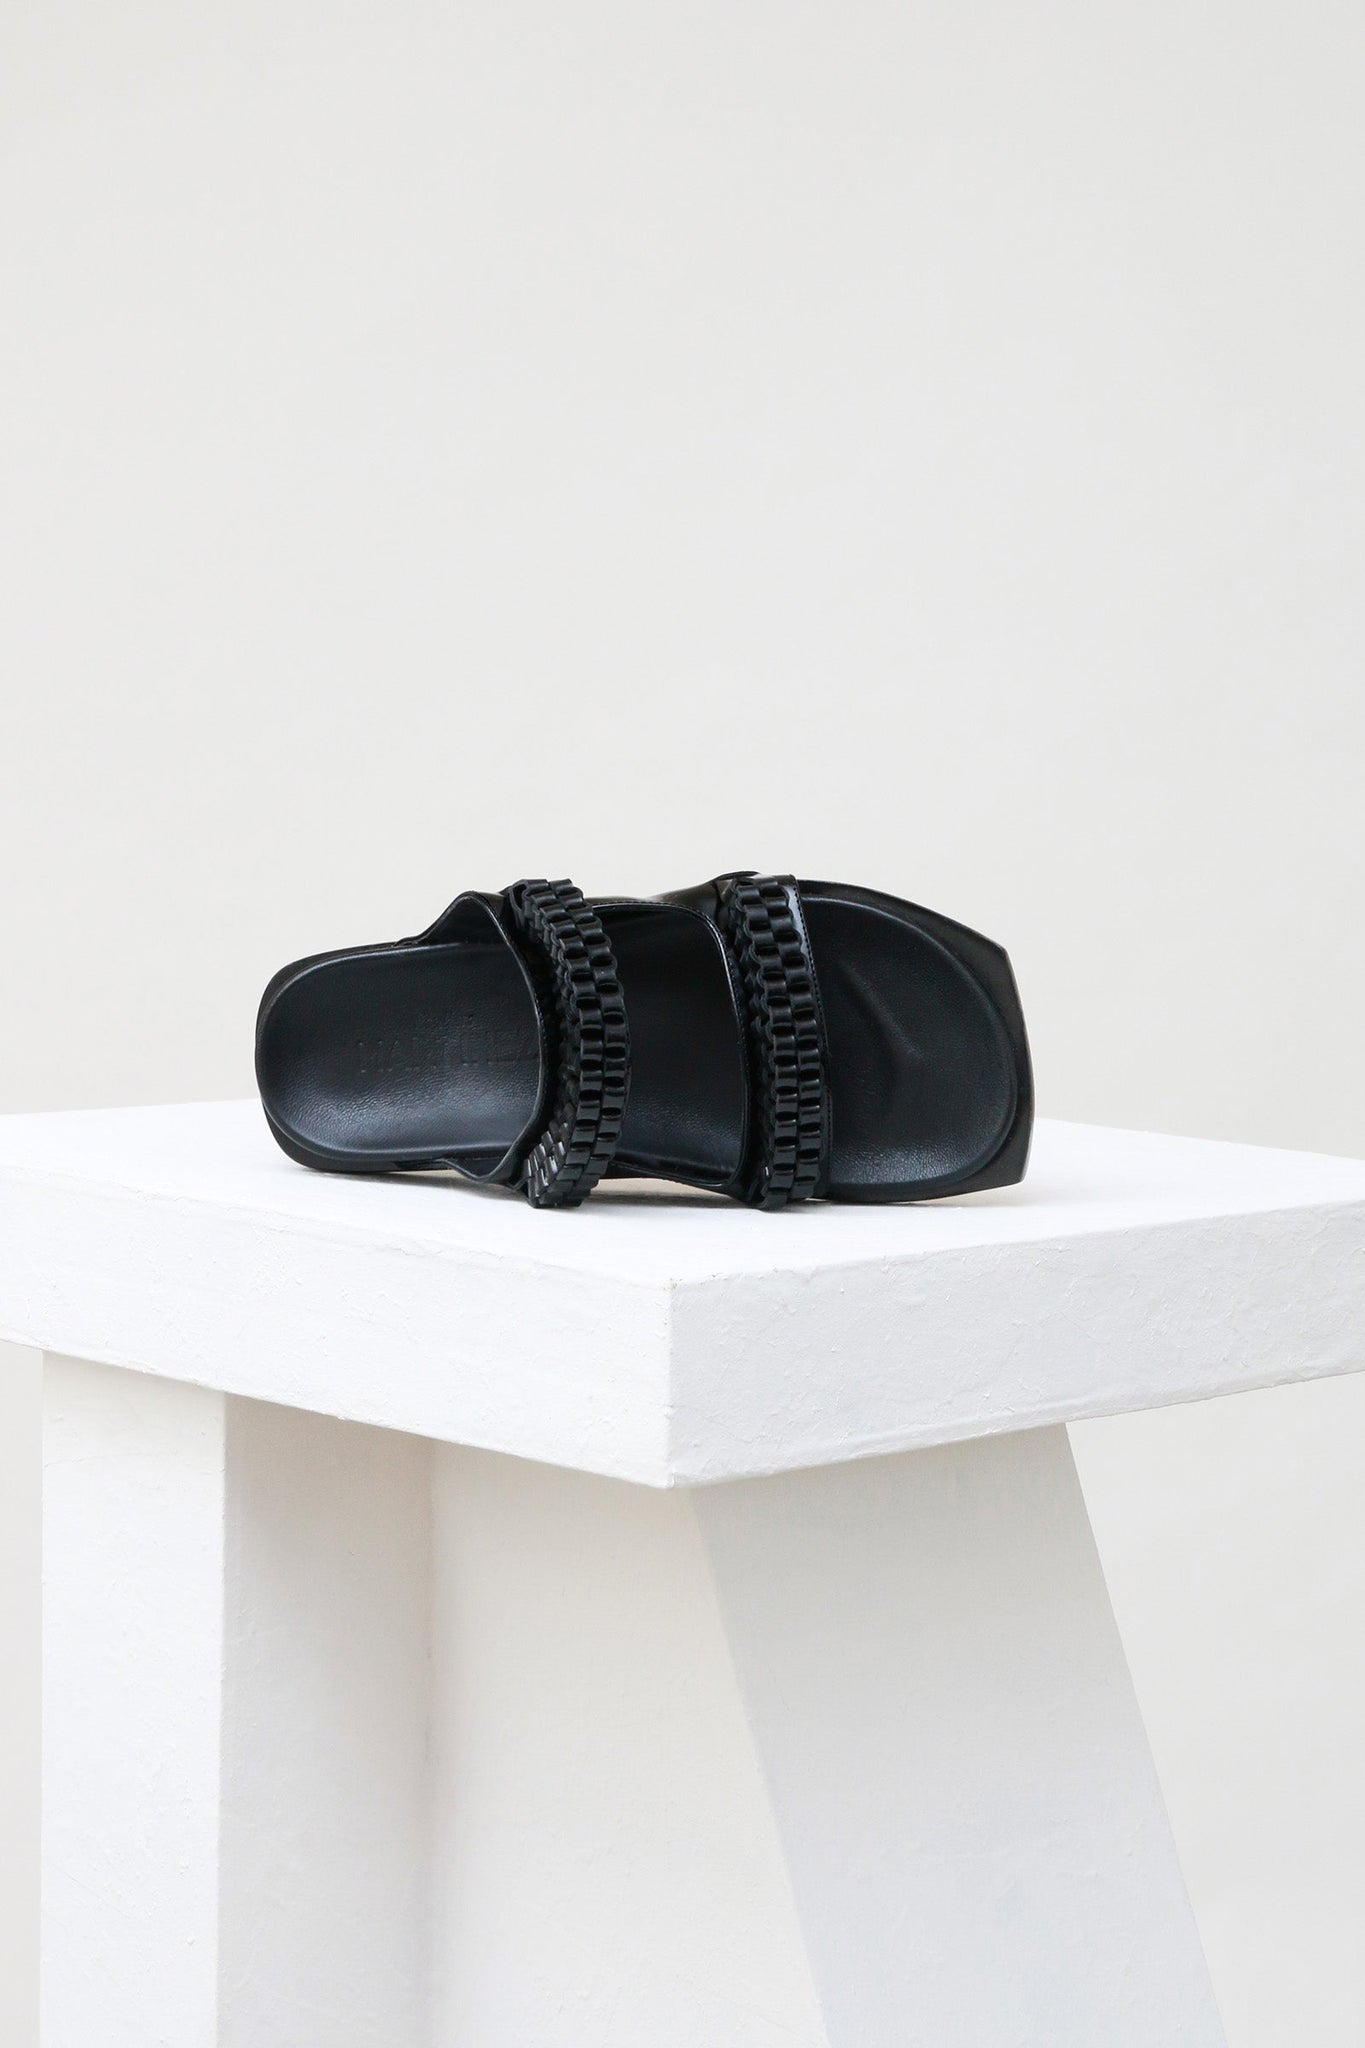 Souliers Martinez Shoes BOGATELL - Black Polished Leather Slides with Lanyard 